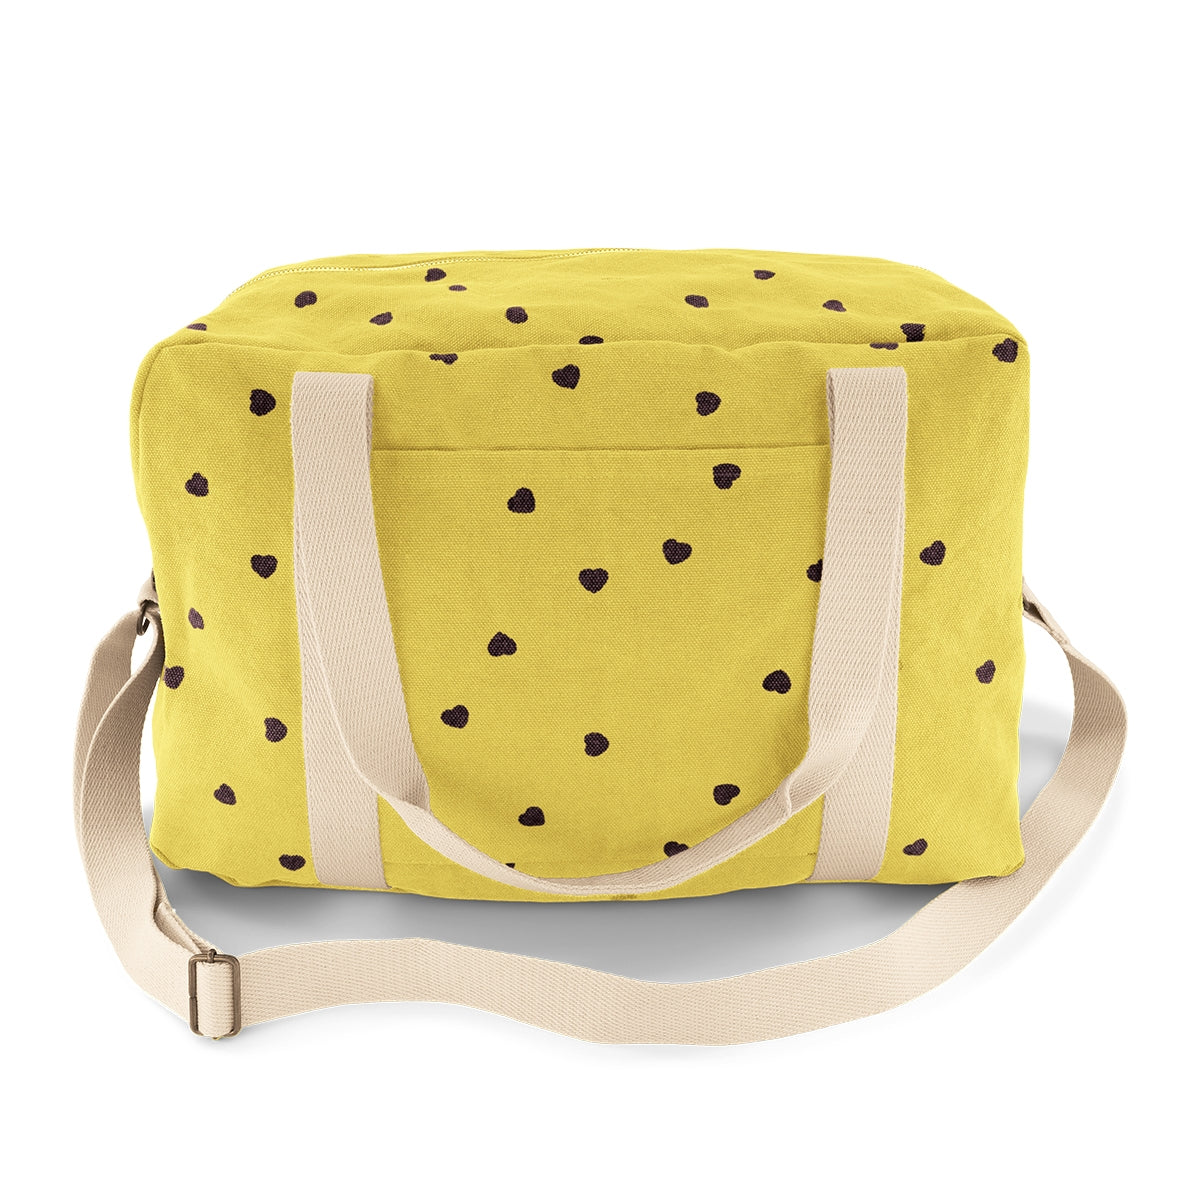 Second hand - Diaper bag, Raphael lemon yellow